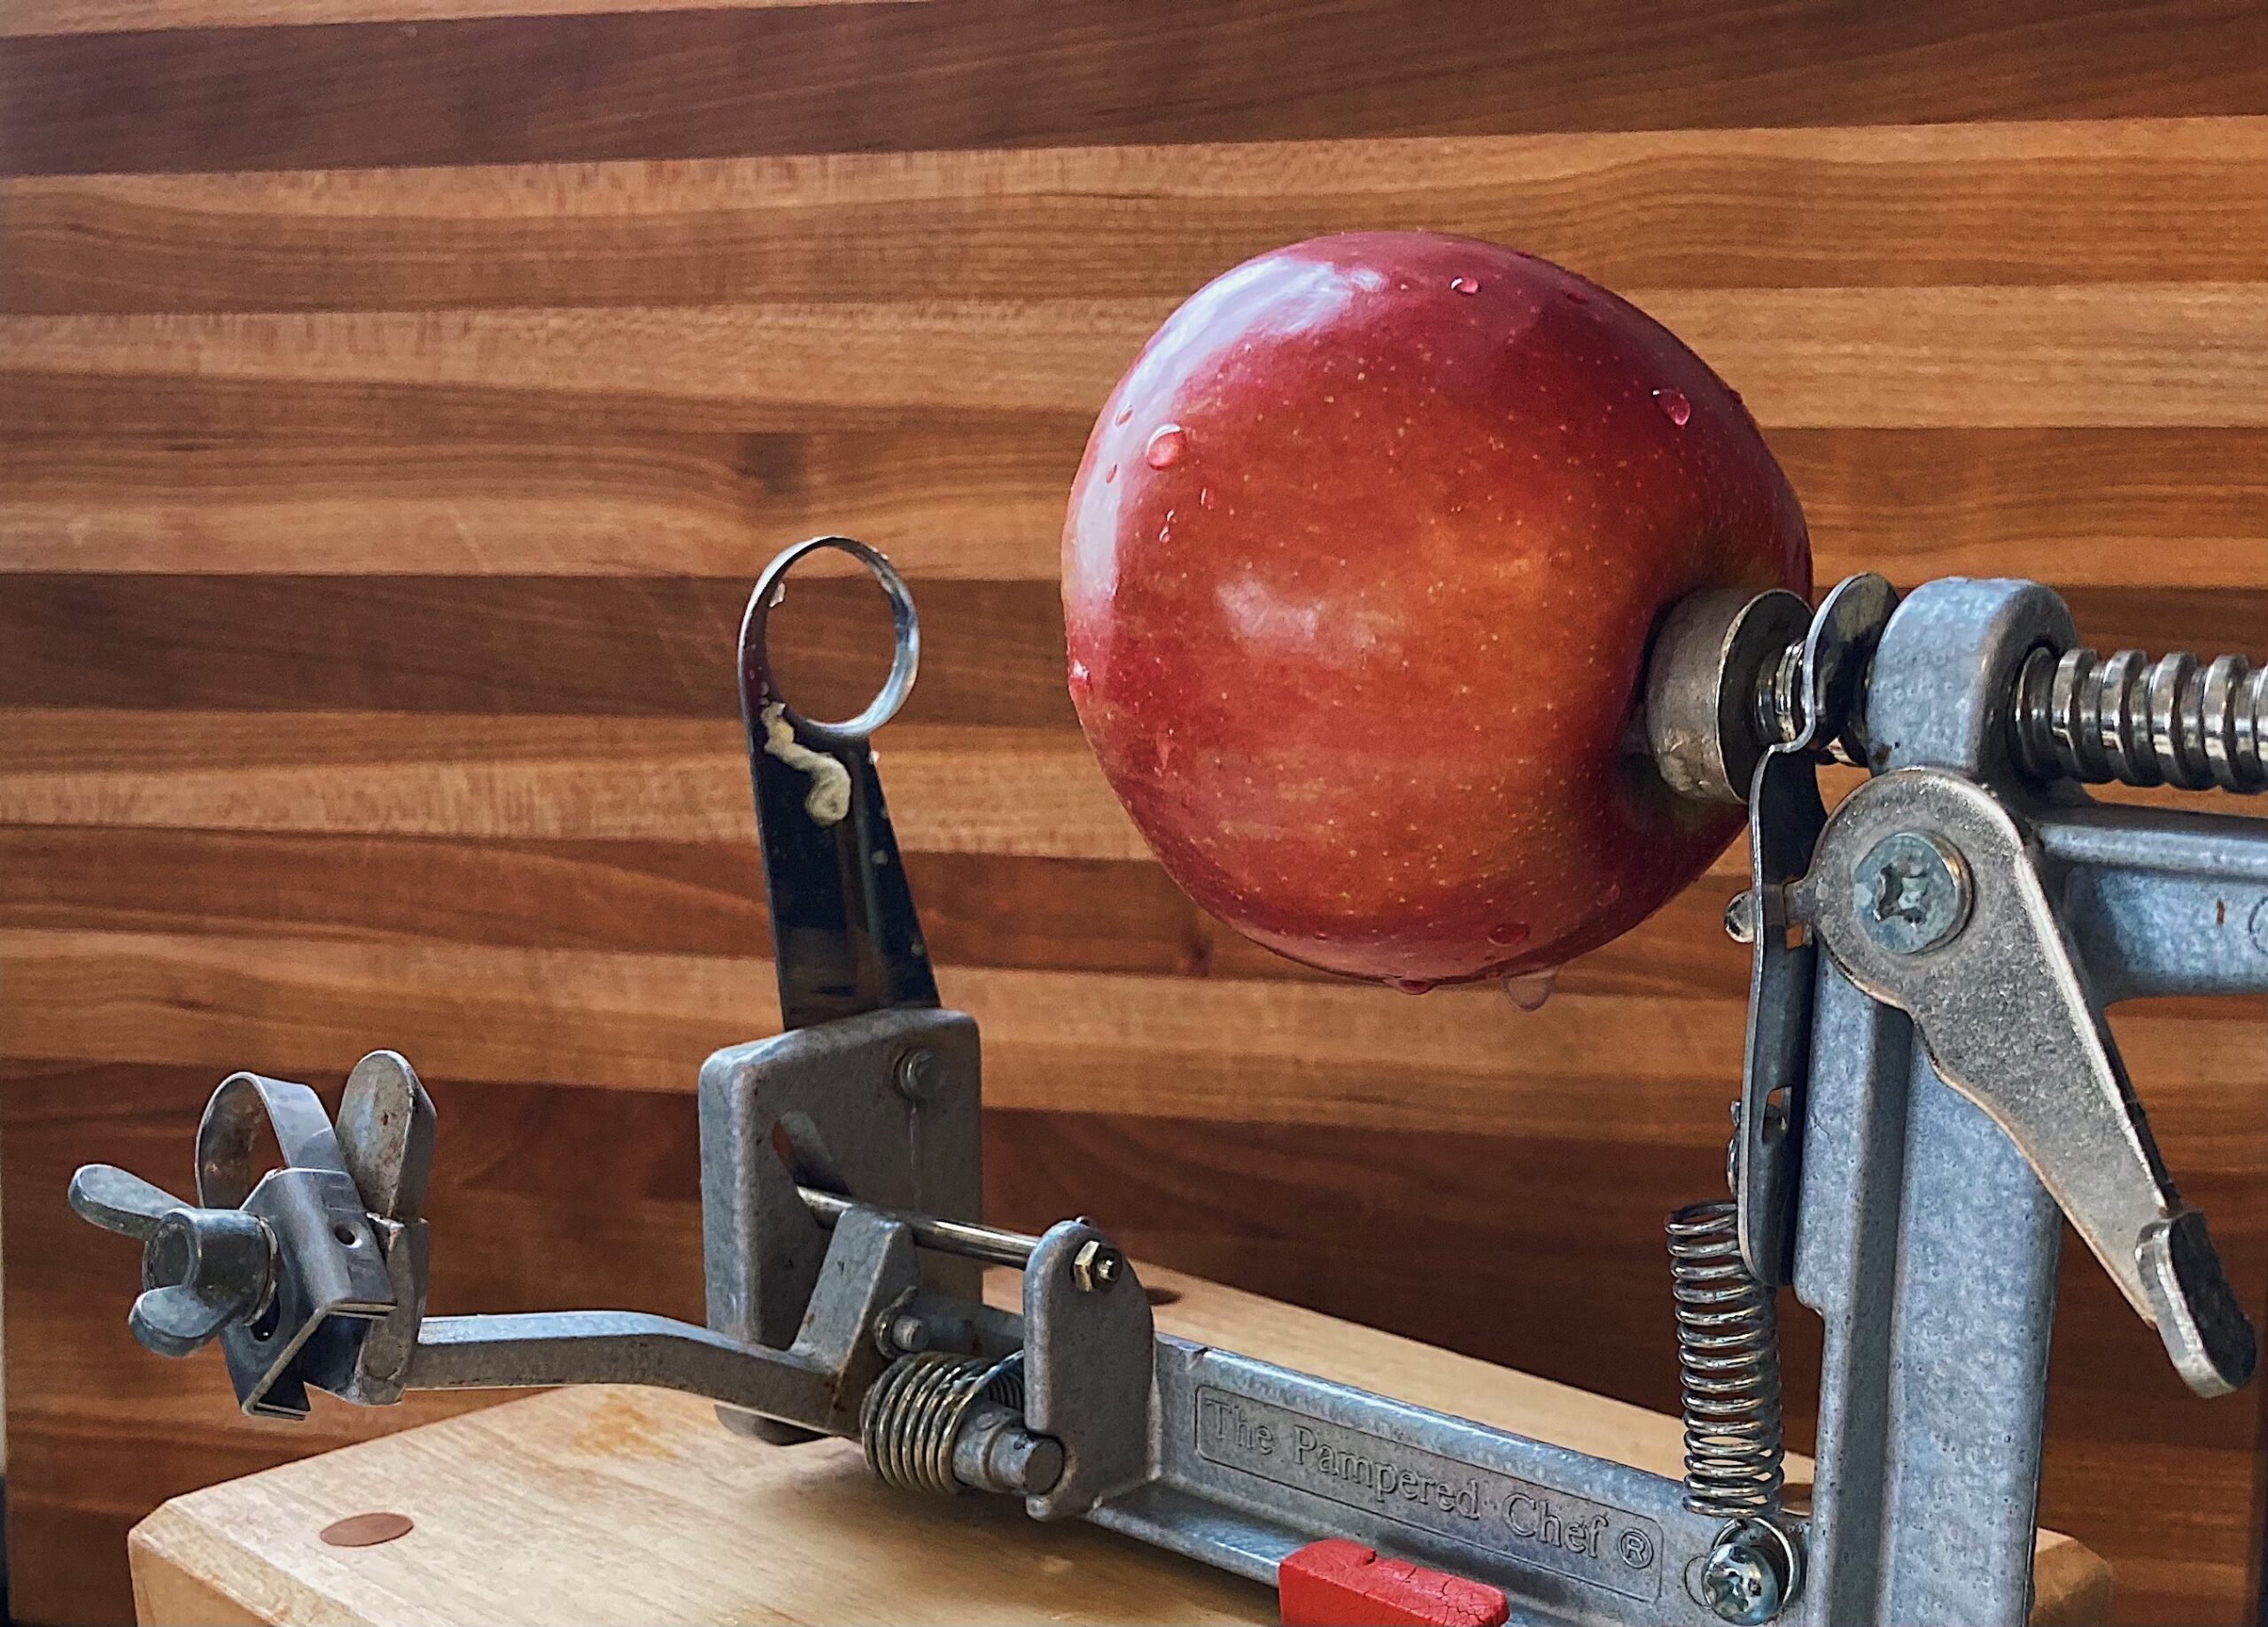 uncut apple on corer slicer peeler